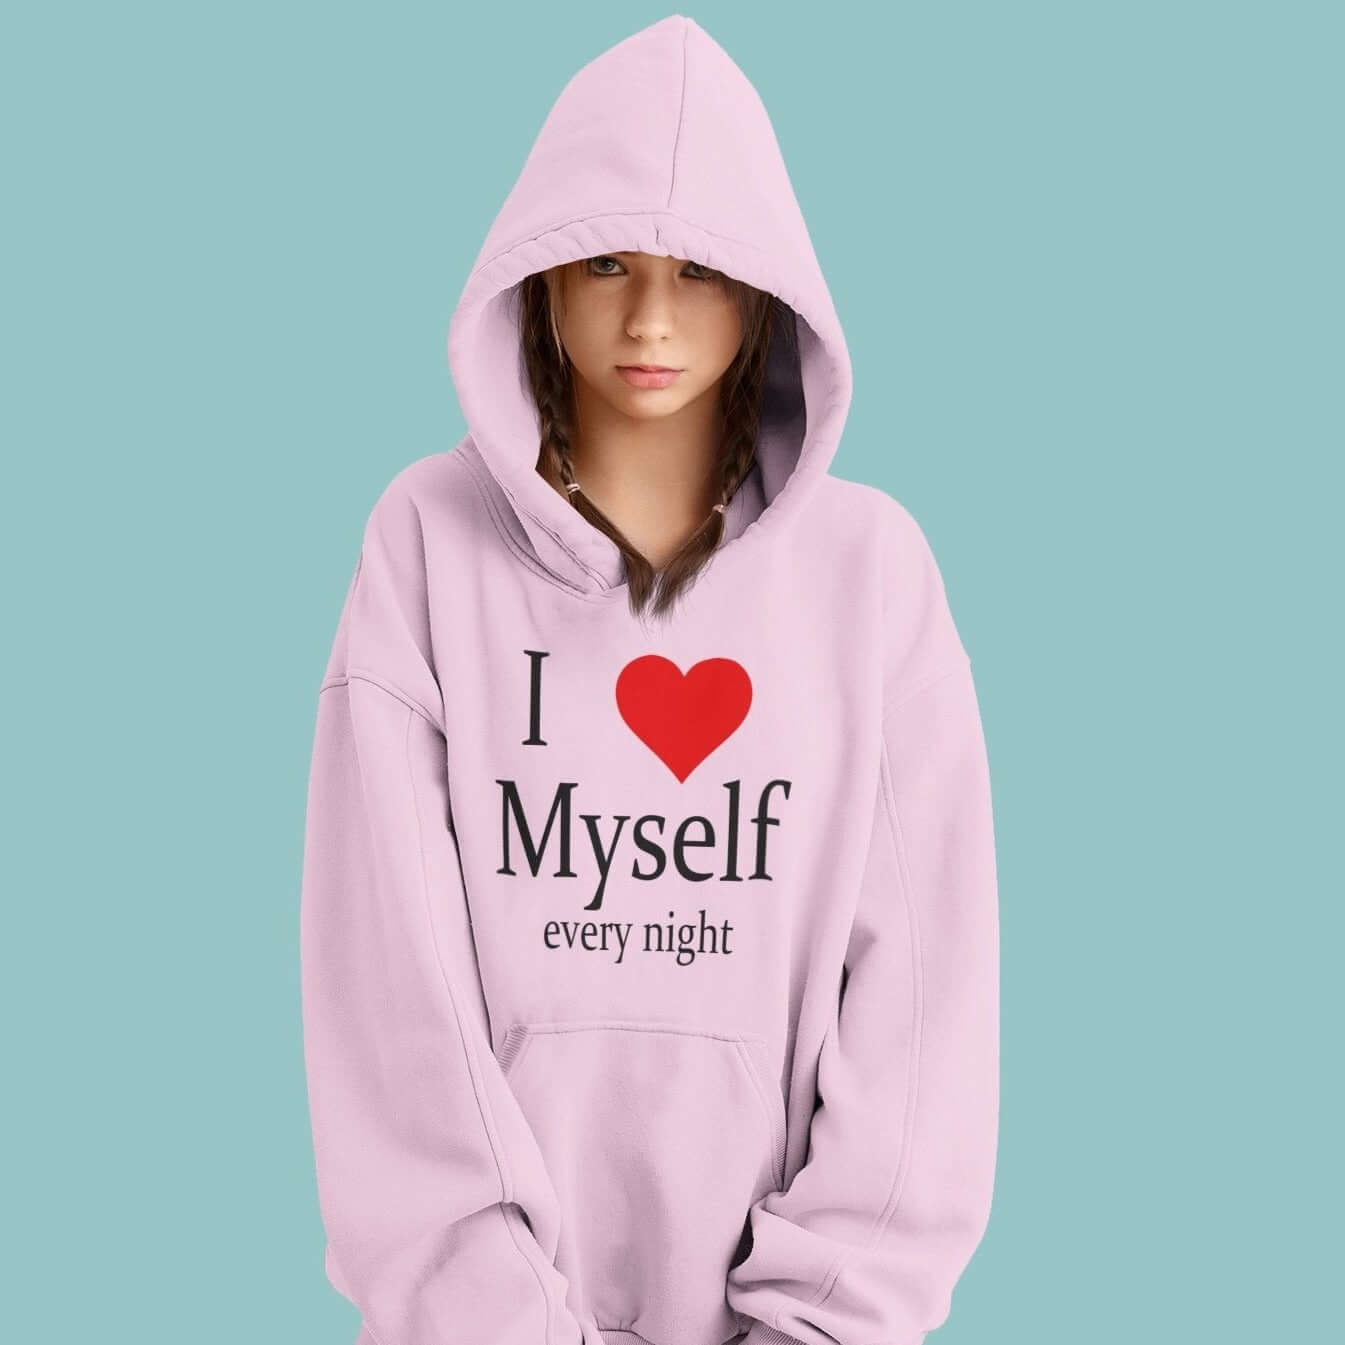 girl wearing pink hoodie with masturbation joke printed on it